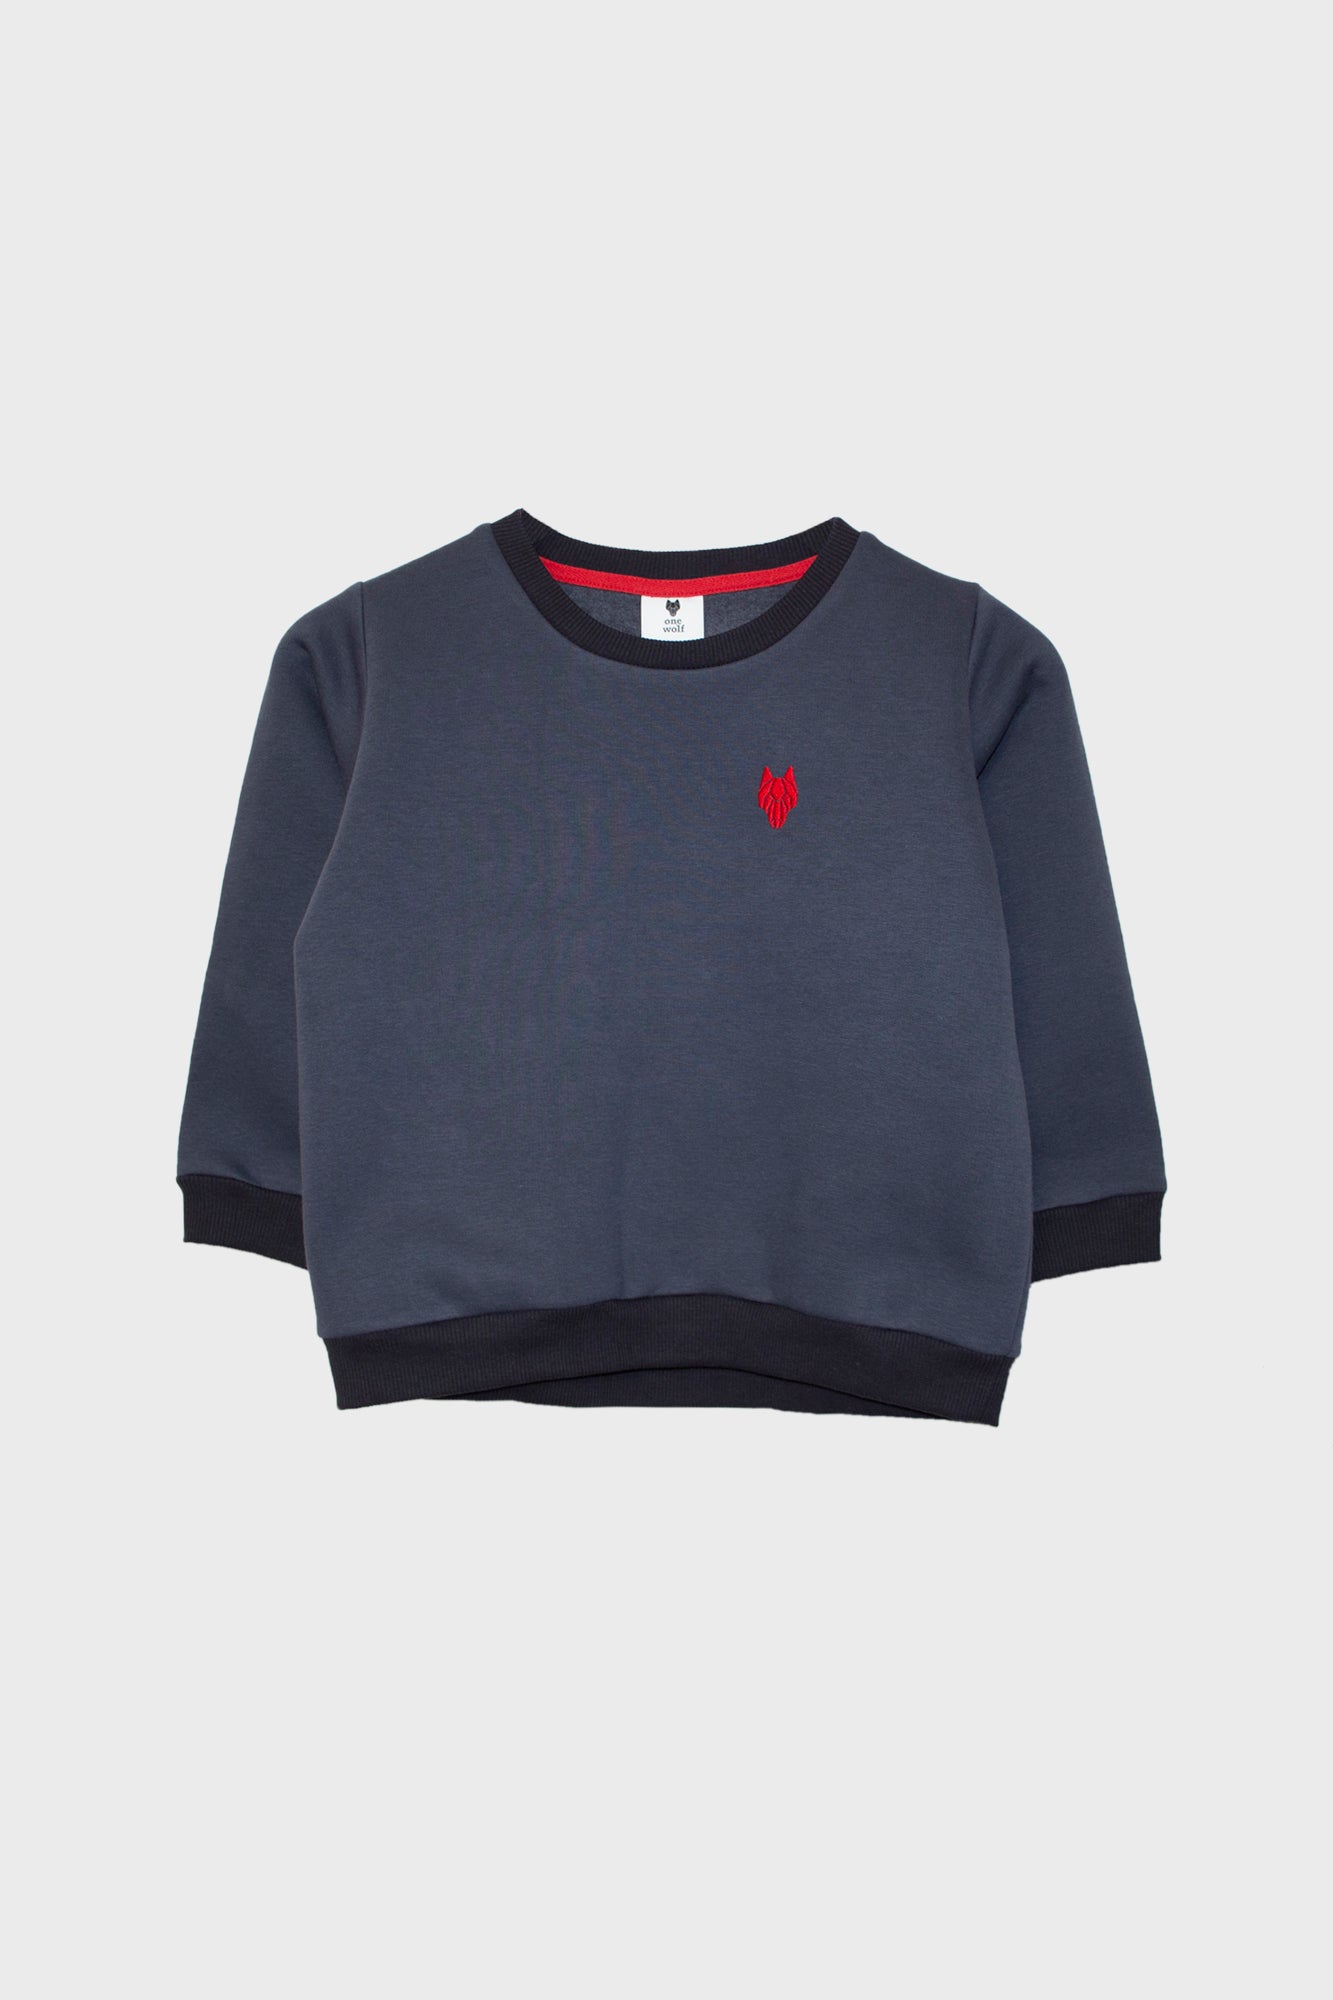 Kid’s One Wolf sweater, dark grey with red logo